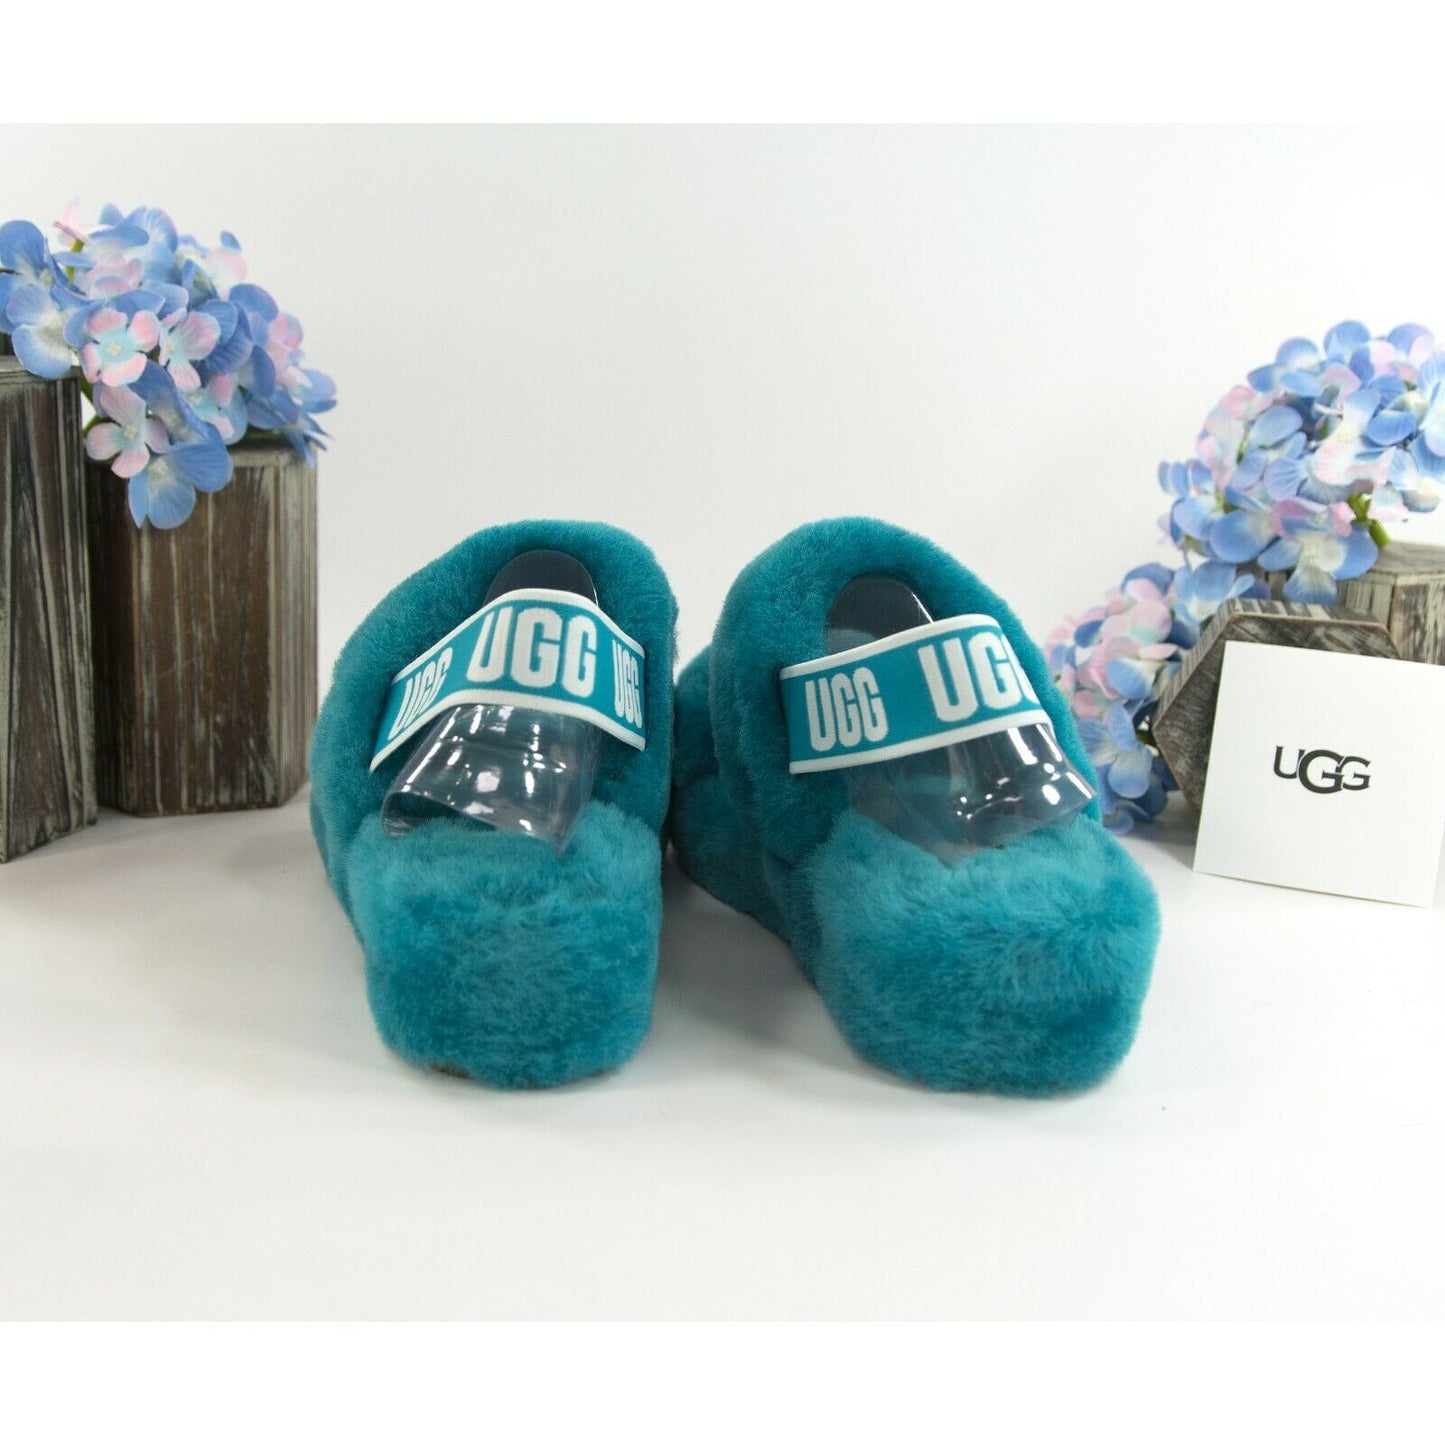 UGG Fluff Oh Yea Aqua Blue Sheepskin Fur Slippers Slides Sandals Sz 9 NIB